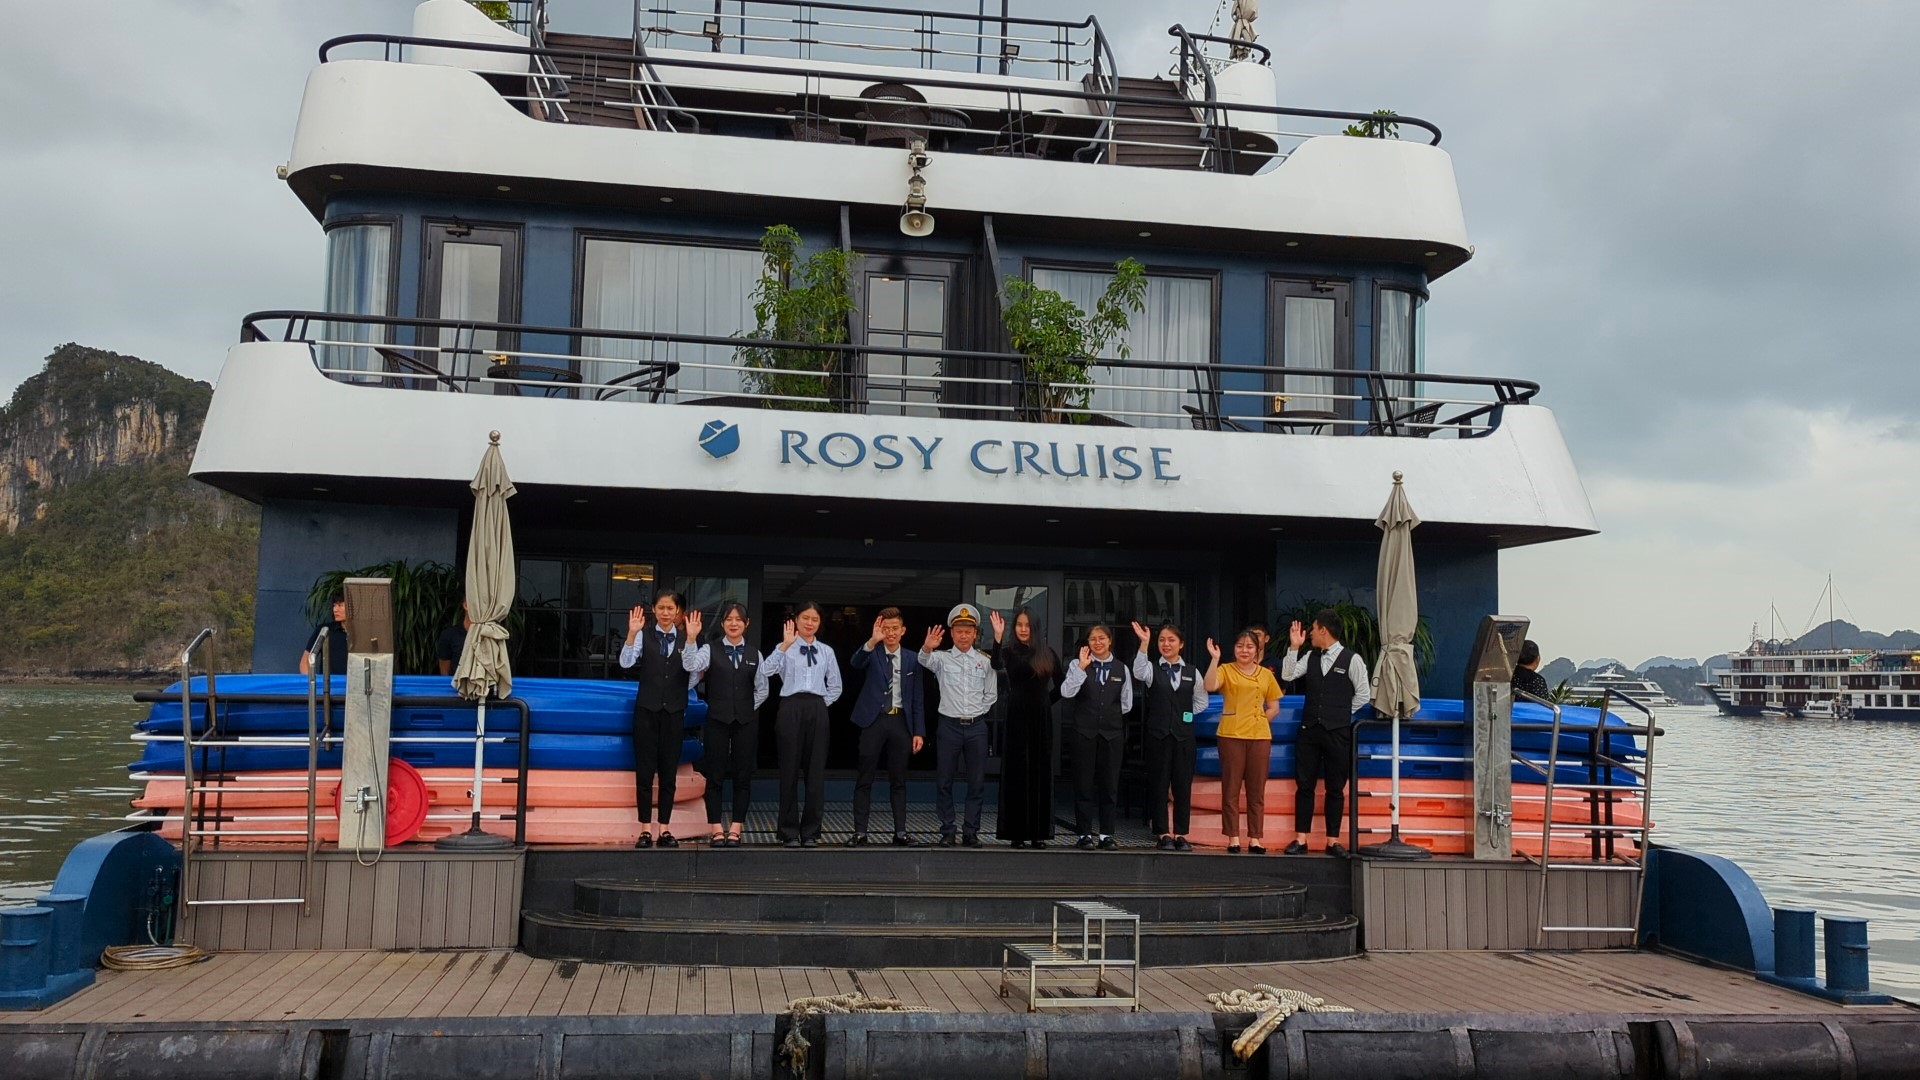 Rosy Cruise staff waving